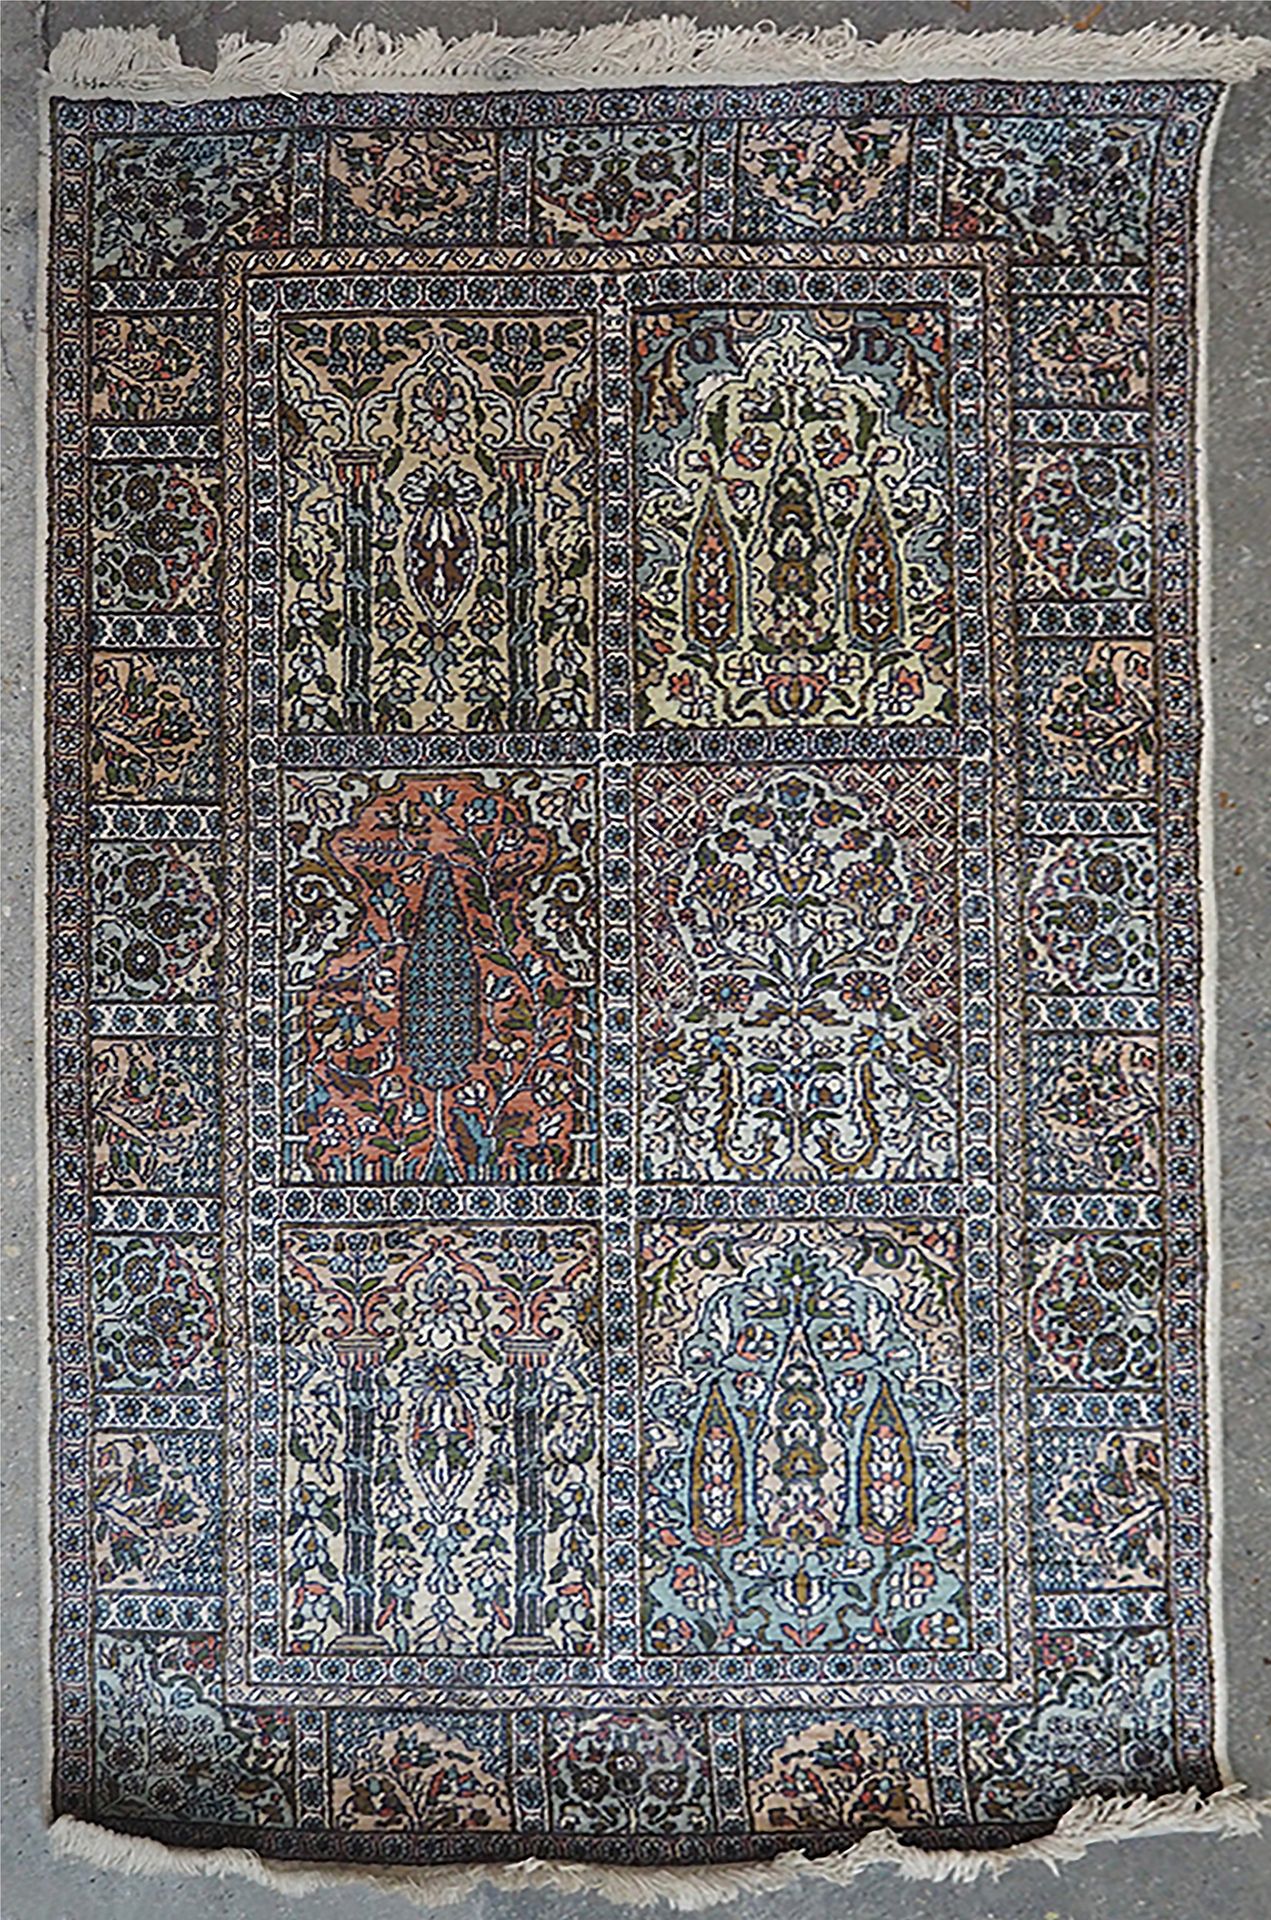 Null 细丝克什米尔 - 印度

约1985年

尺寸：155 x 98 cm

棉质基础上的丝绒

状况良好

庇护所和花园装饰

有双排的三个祈祷镜，有双&hellip;